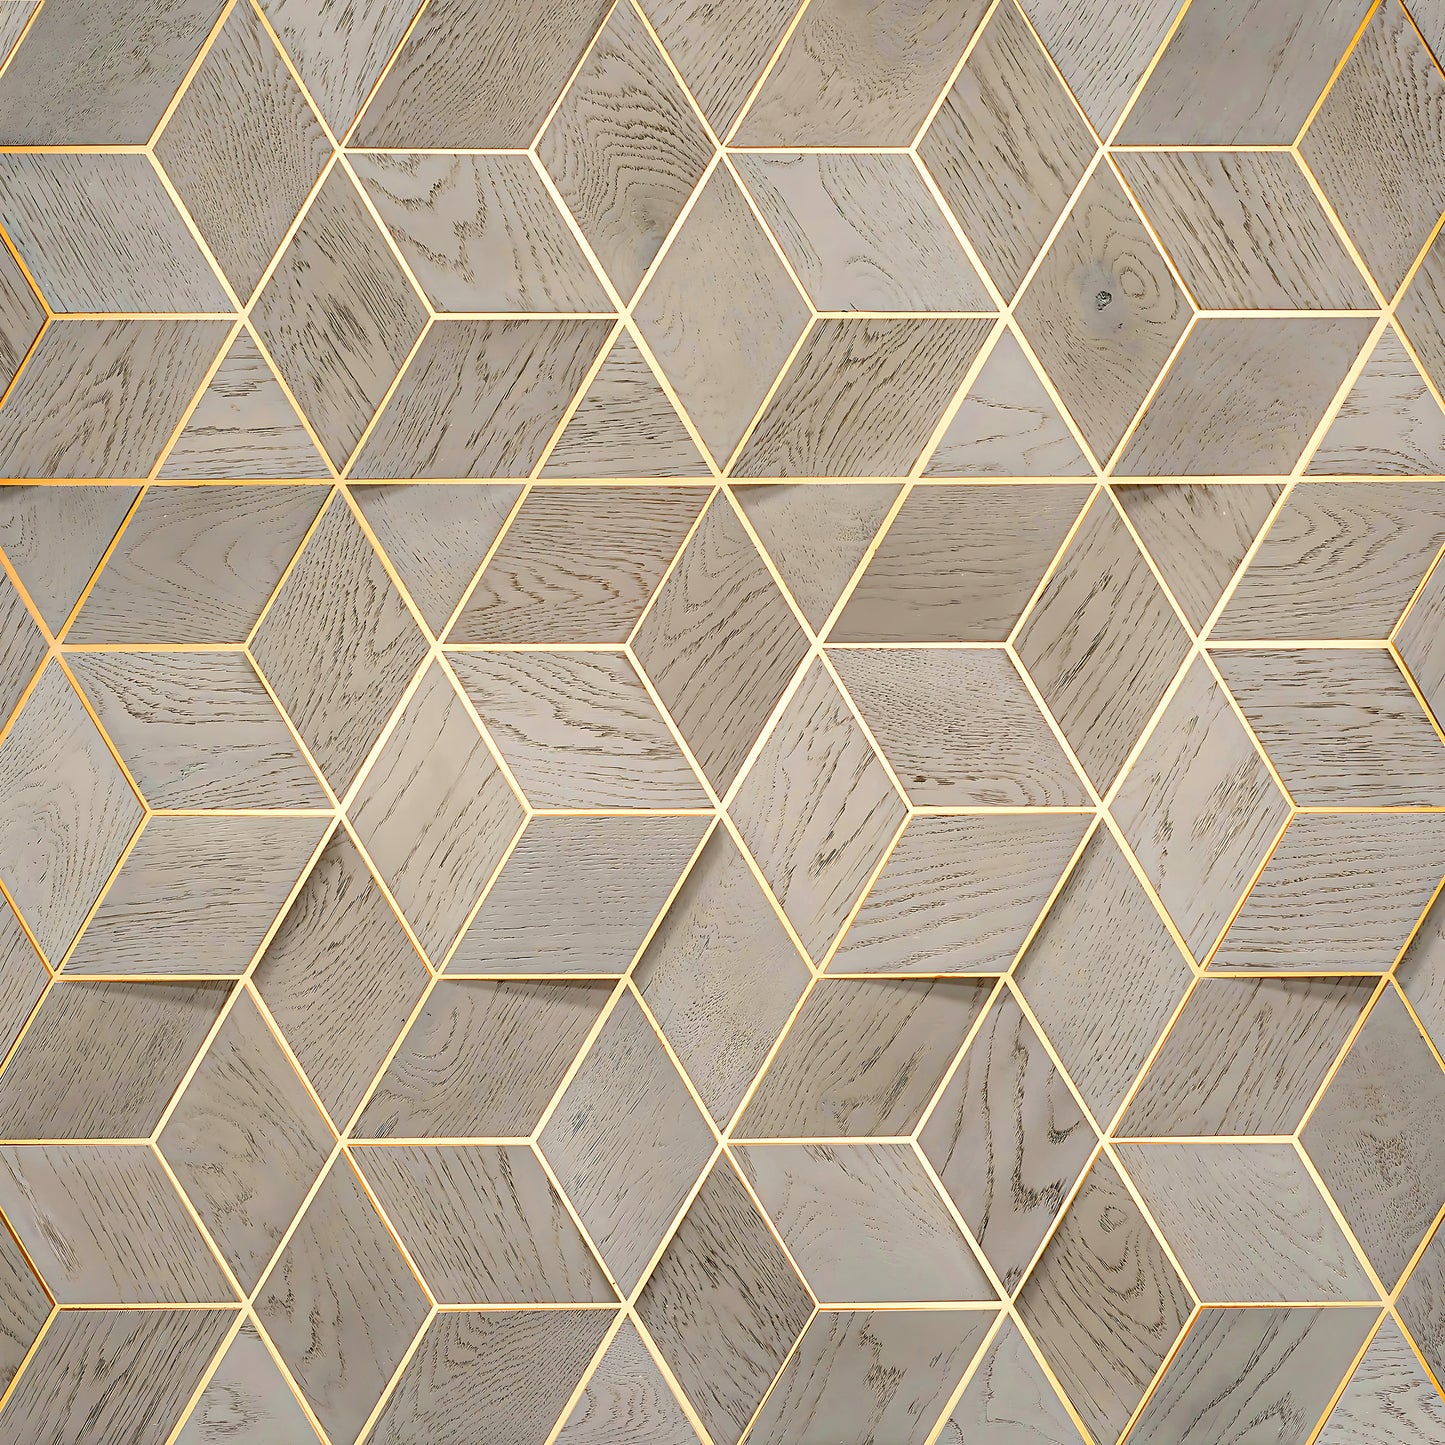 wallpaper 3d classic wood panel geometric tile